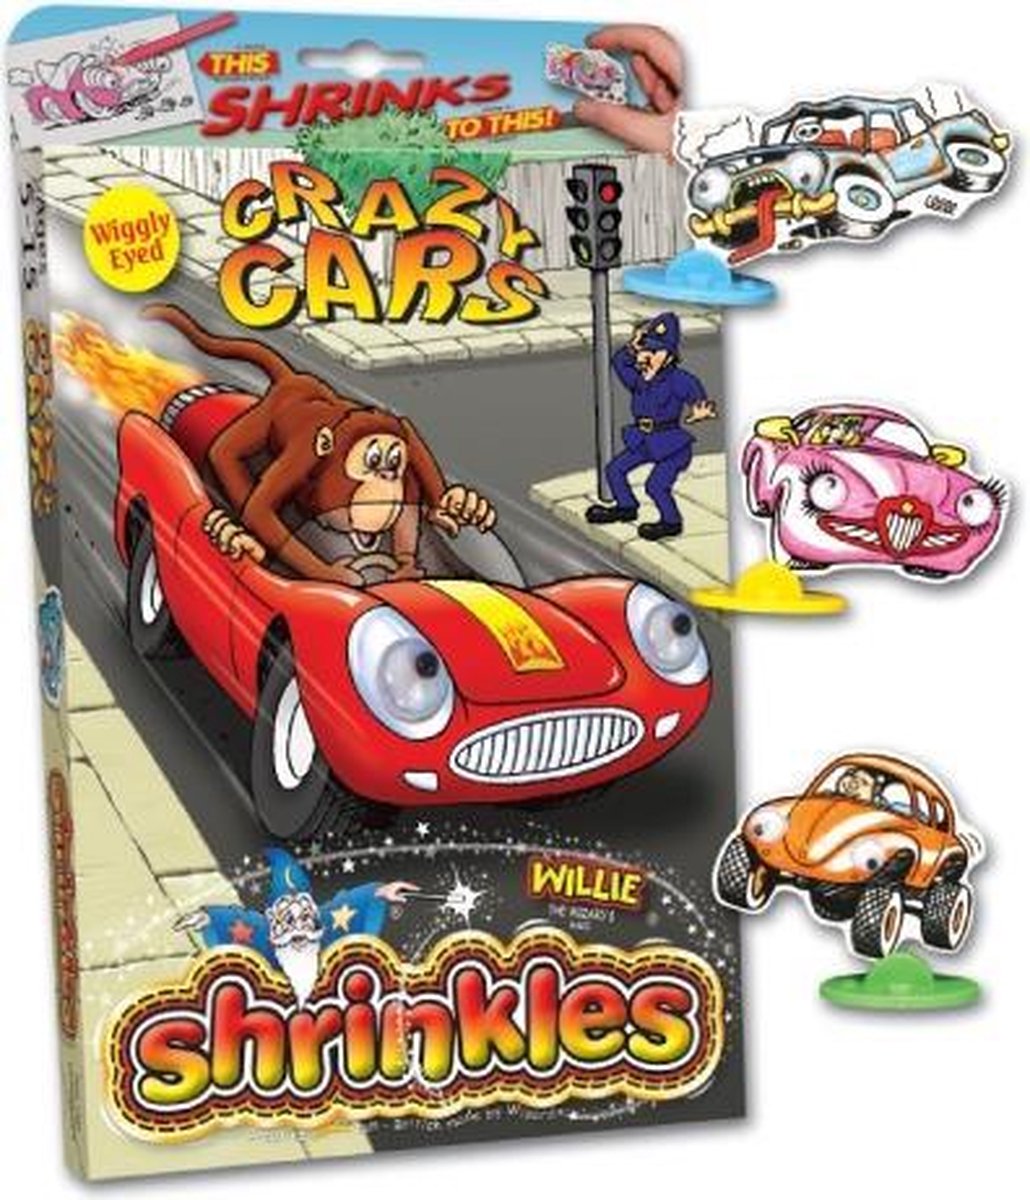 Shrinkles kit Wiggly Eyed Crazy Cars